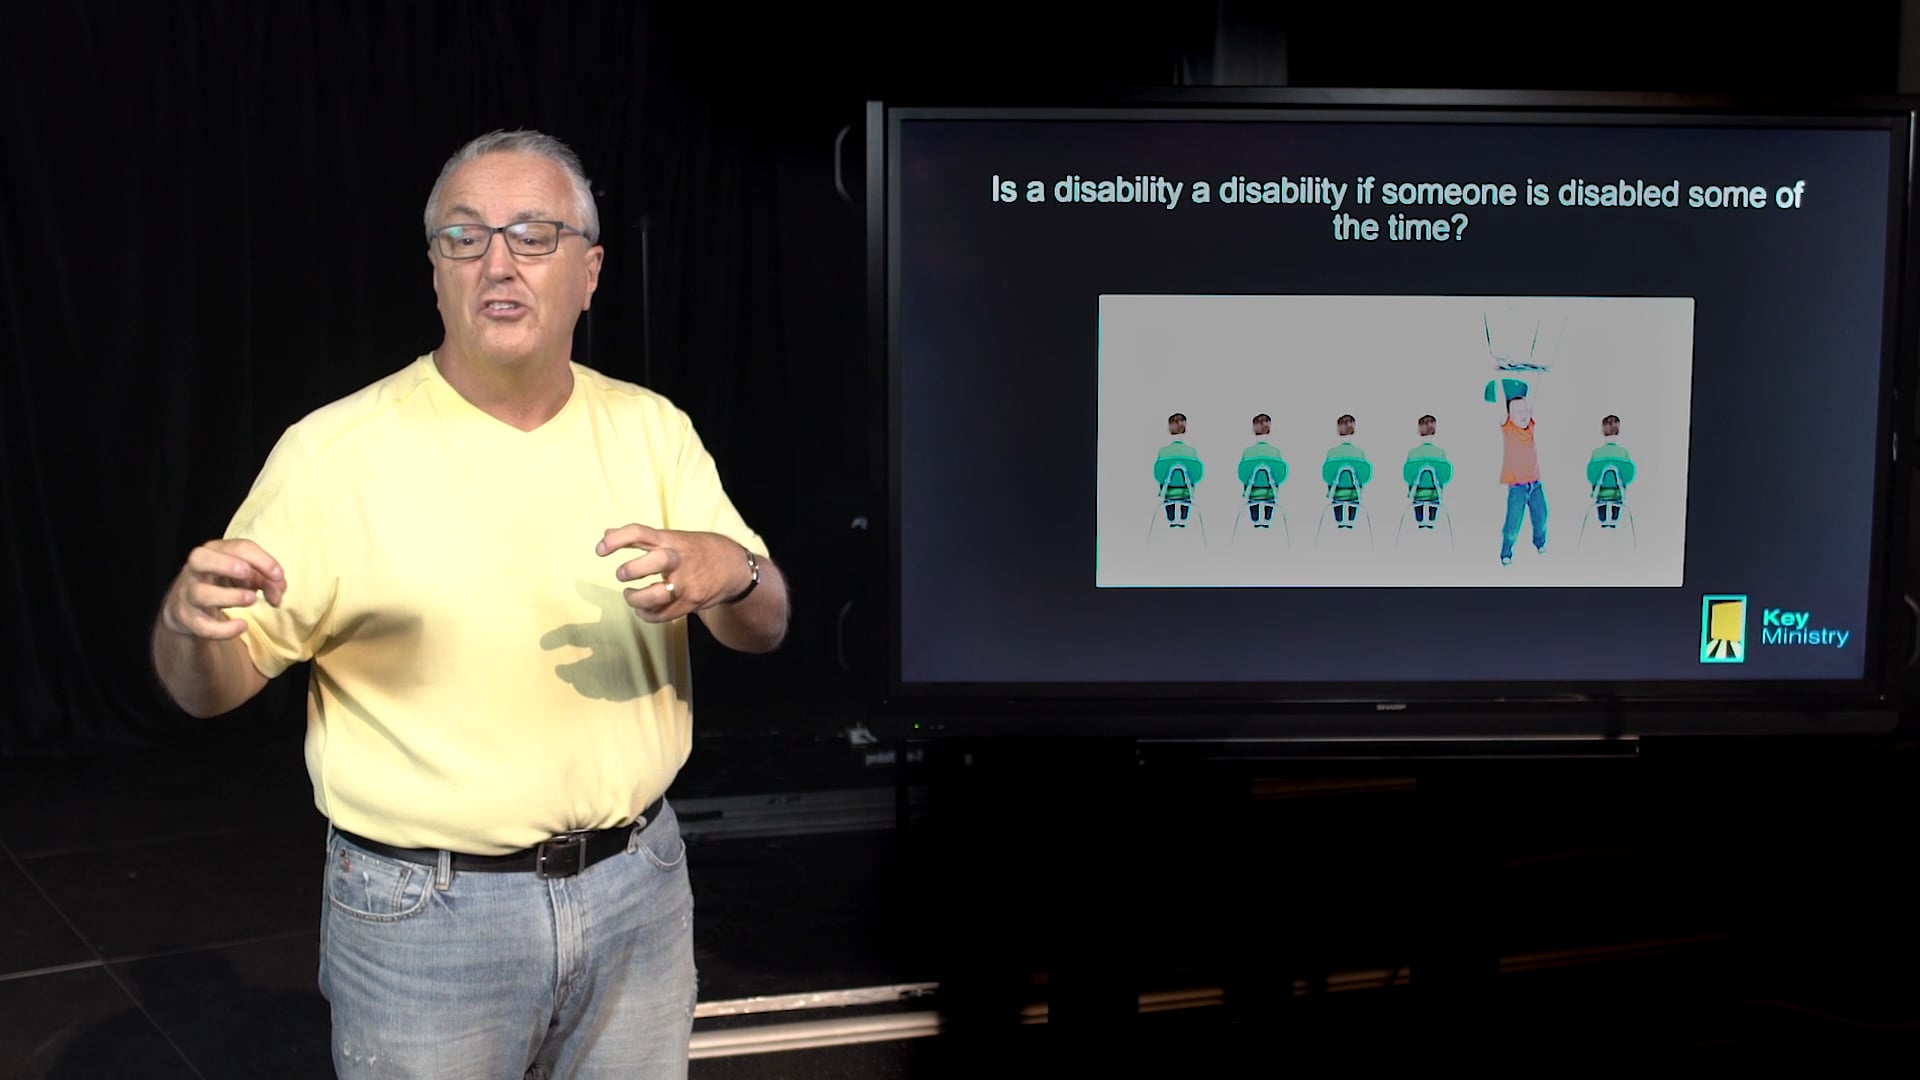 man teaching on disability using a screen